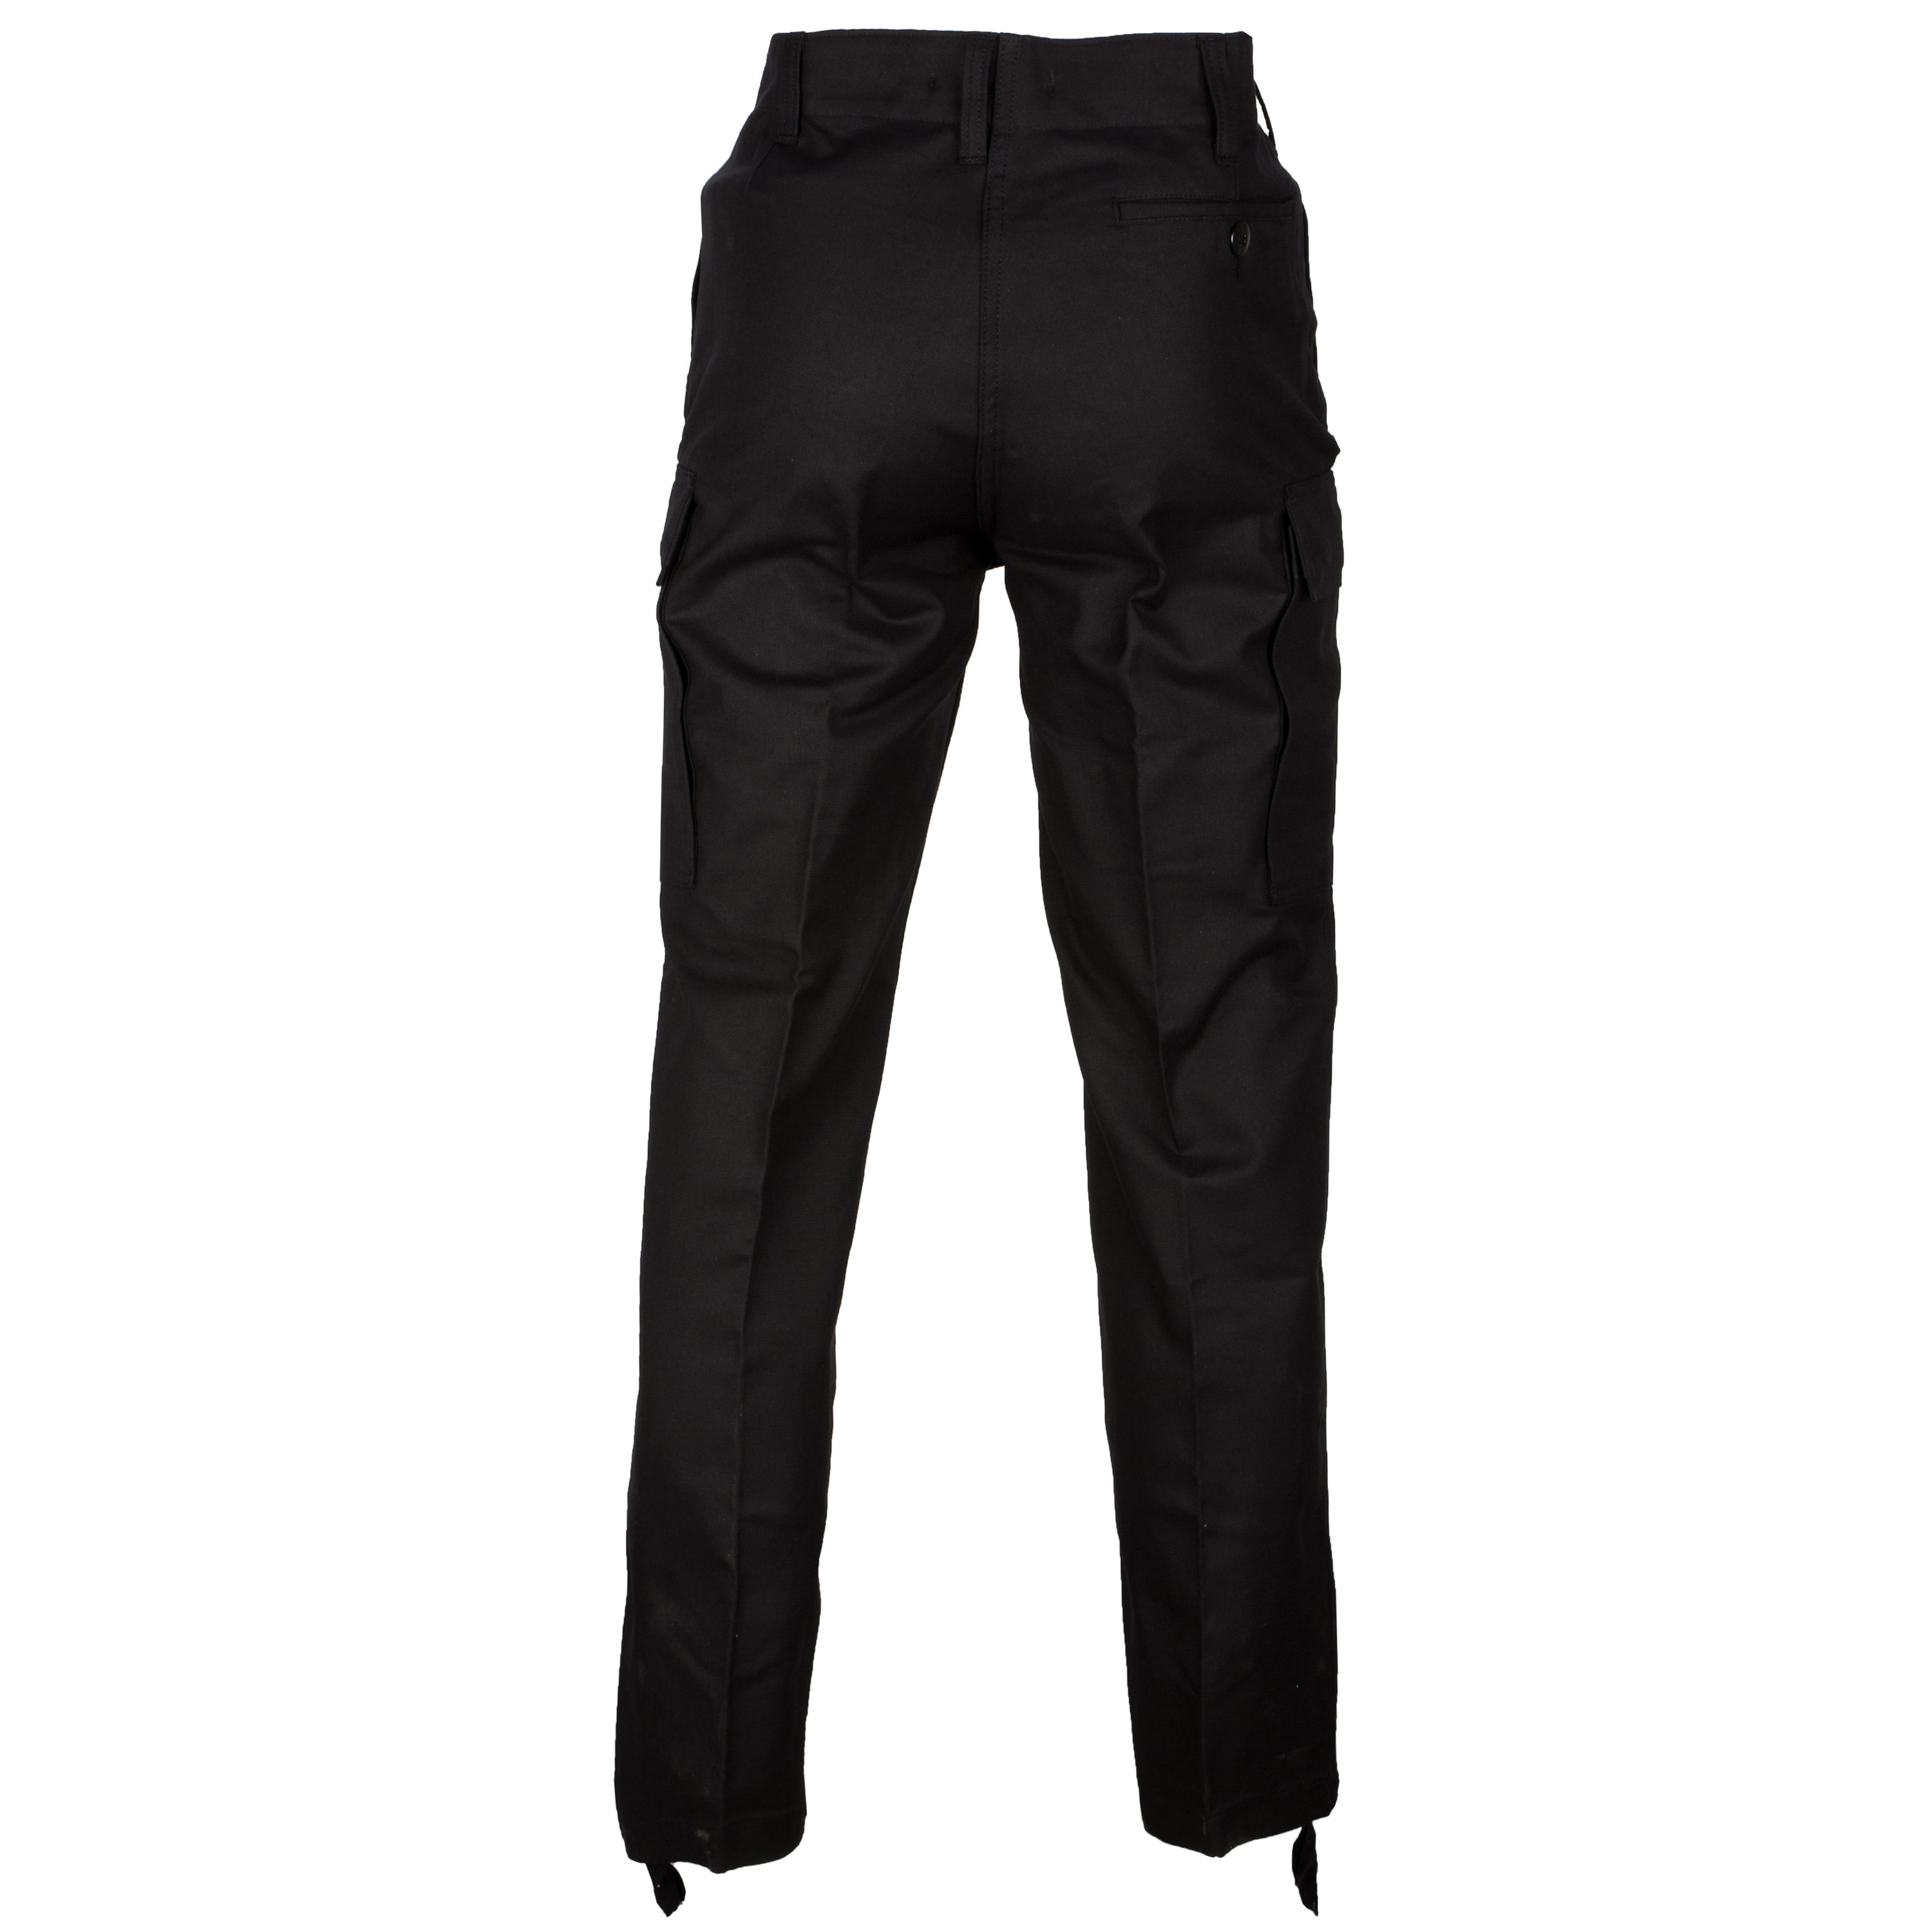 Purchase the Moleskin Pants black by ASMC